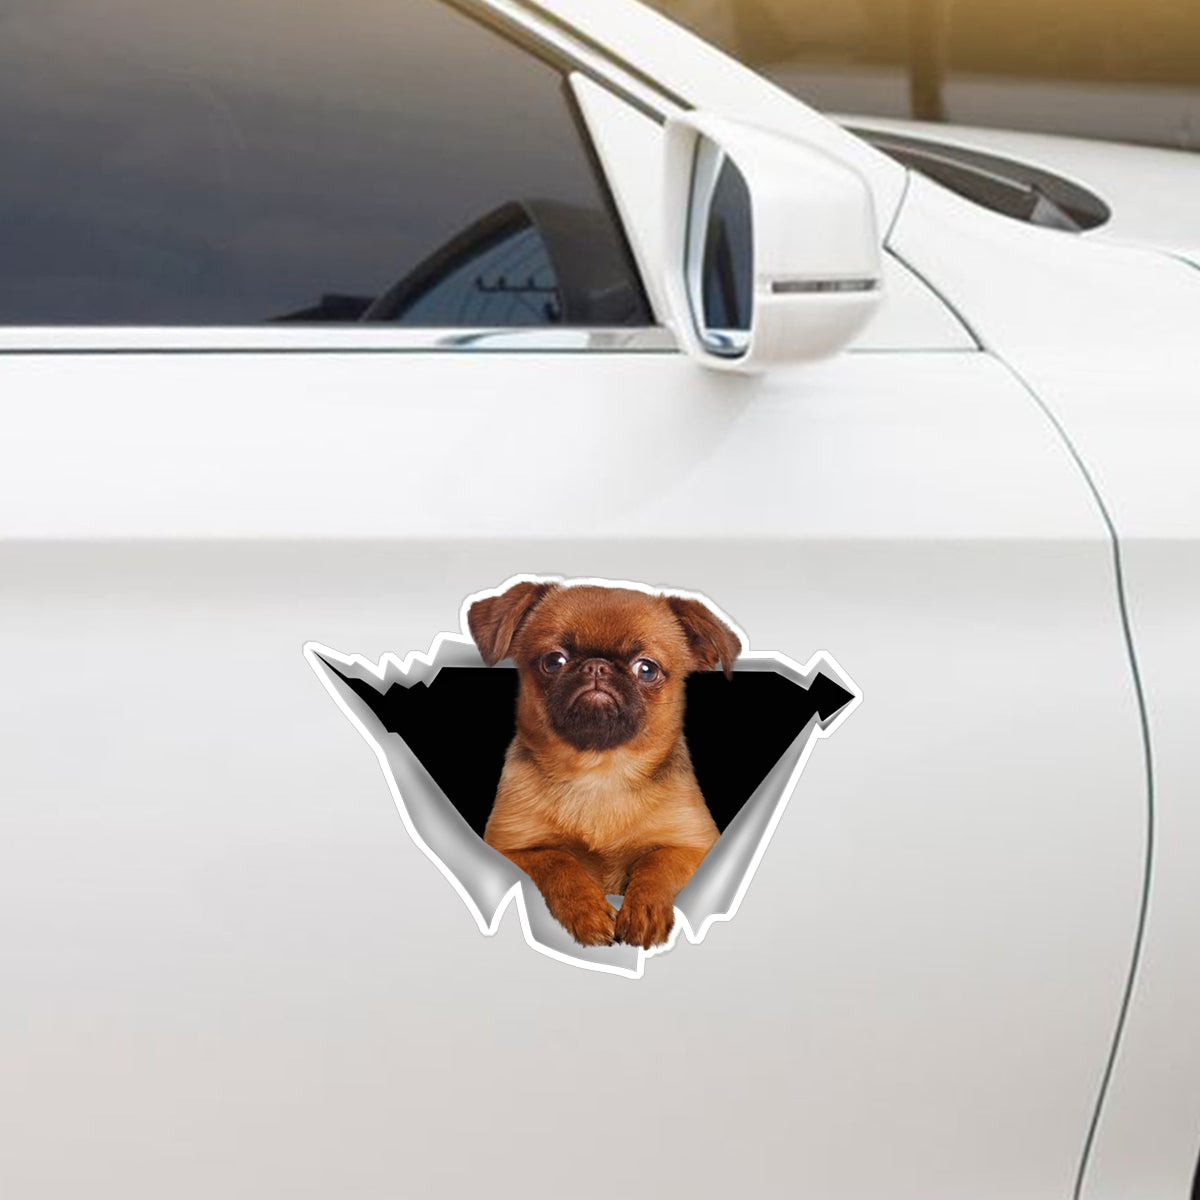 We Like Riding In Cars - Griffon Bruxellois Car/ Door/ Fridge/ Laptop Sticker V3